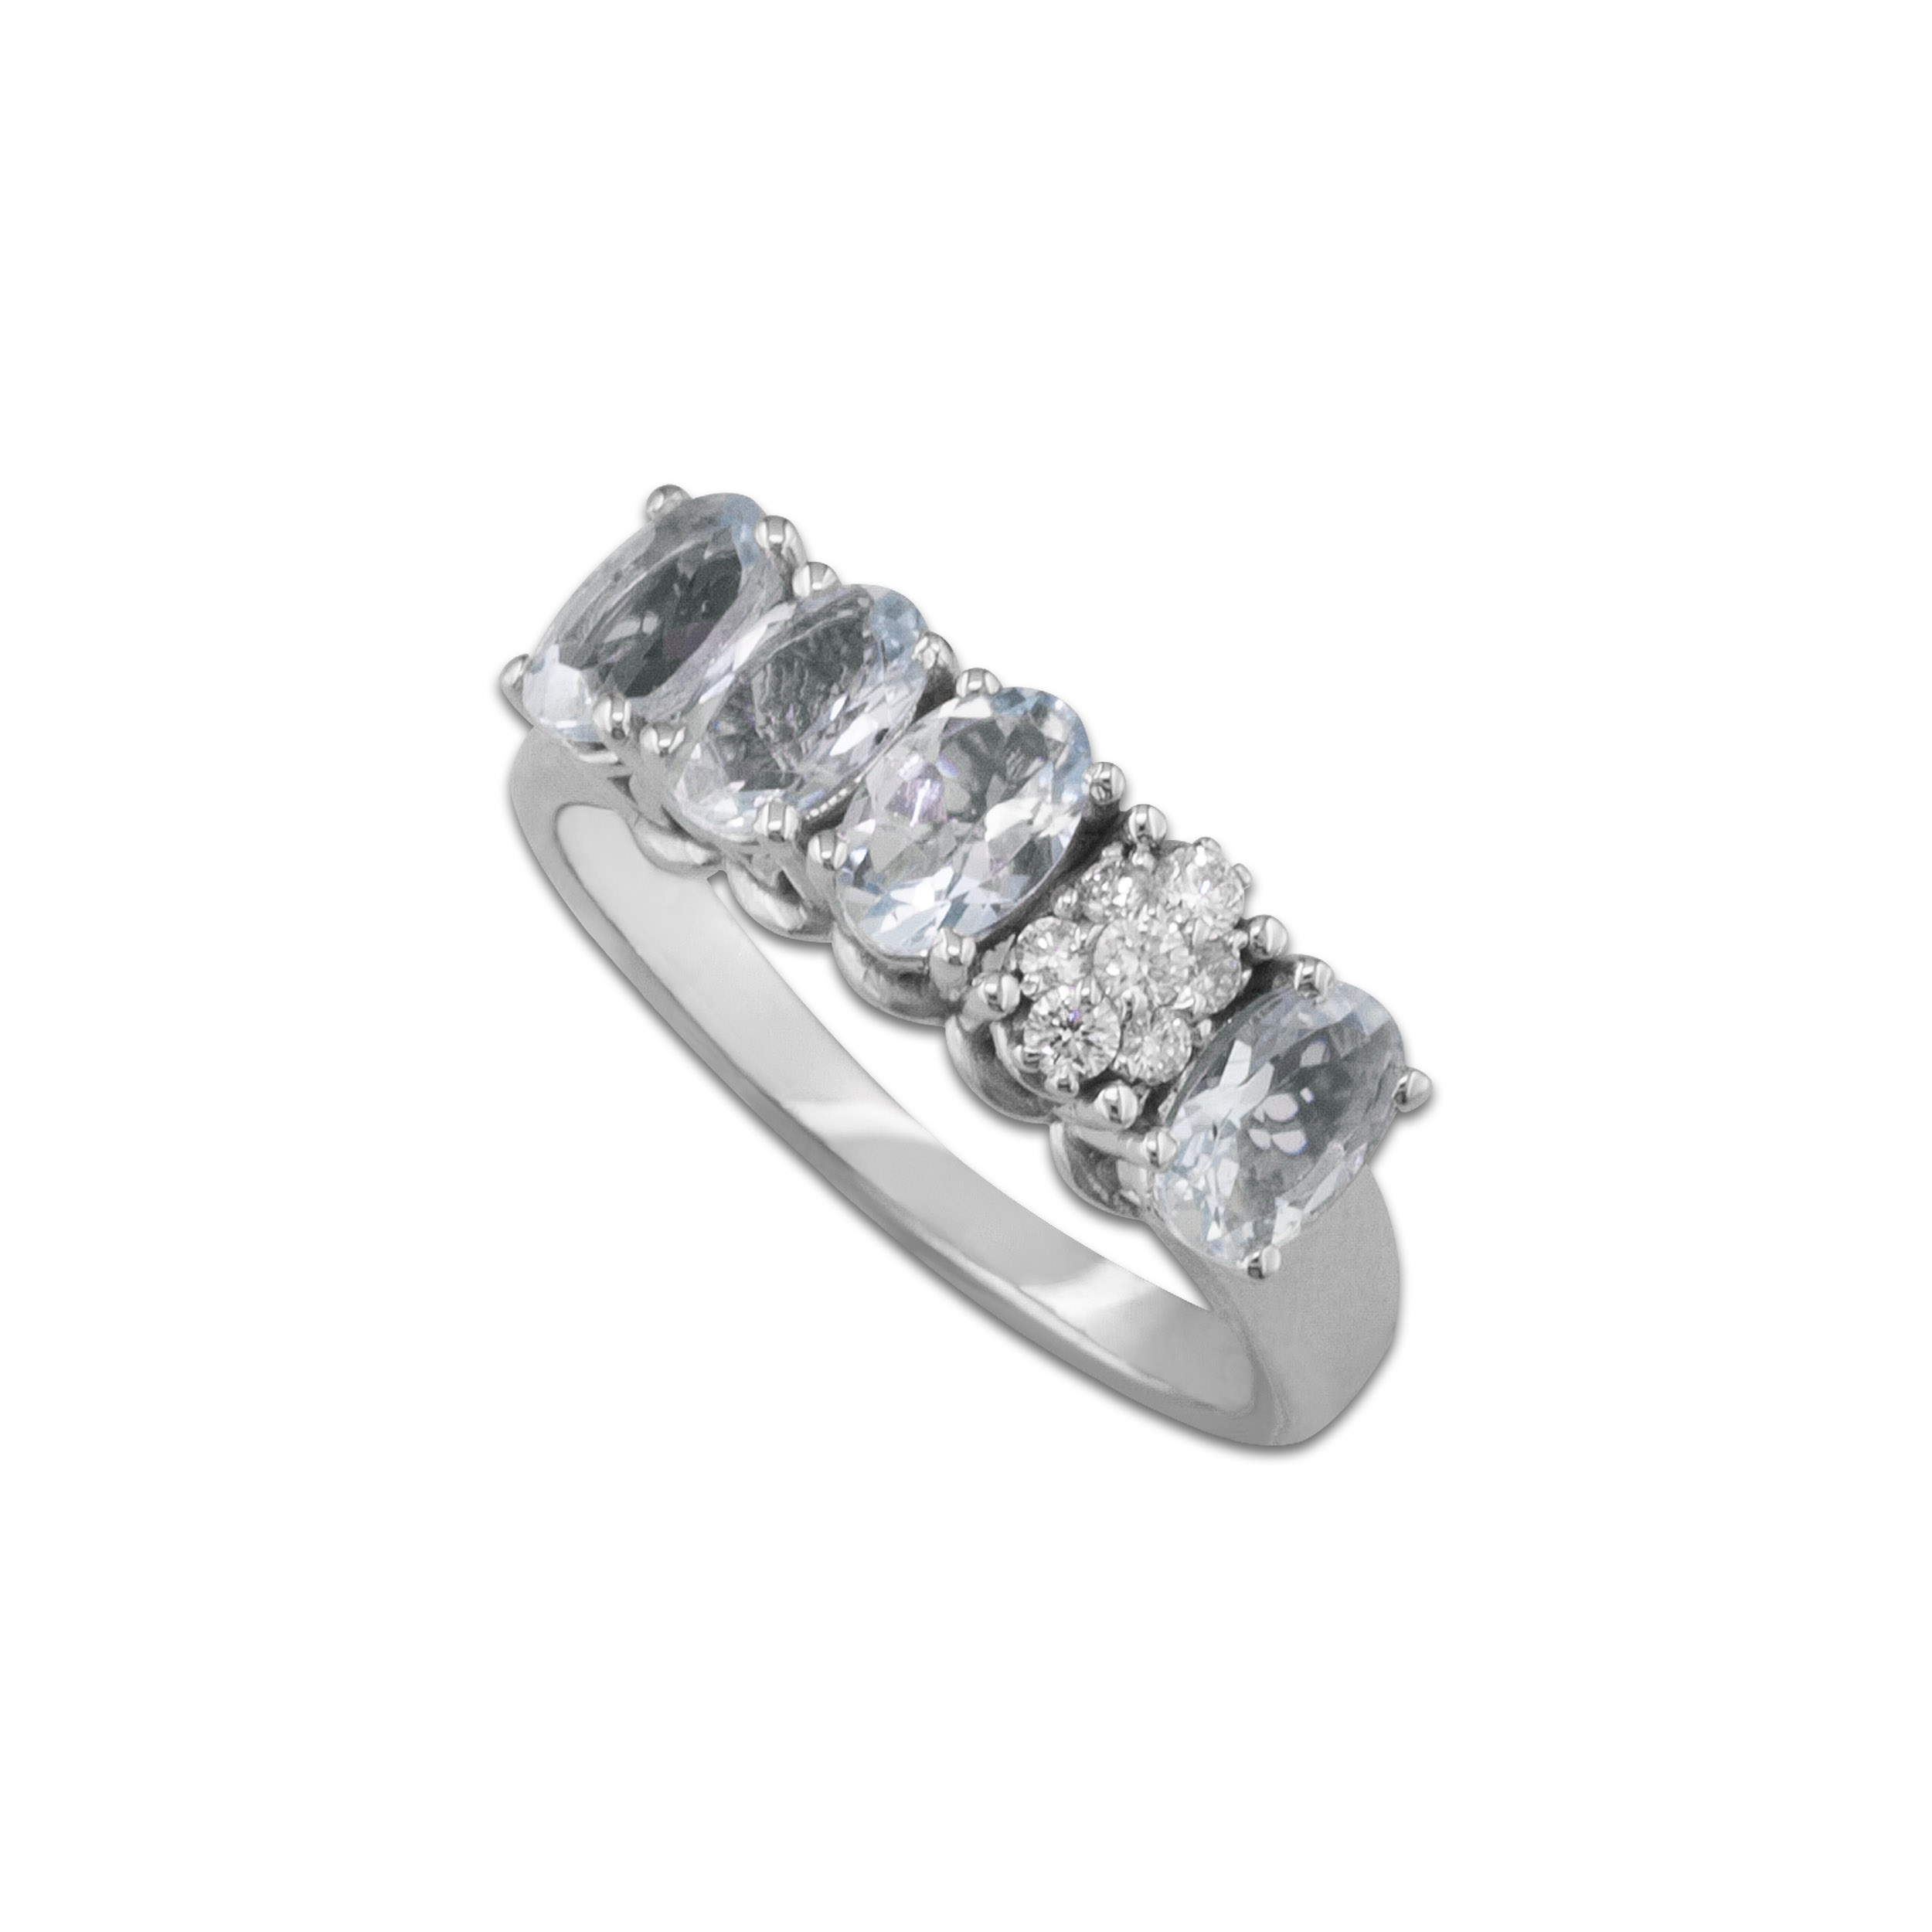 k18 white gold ring with aquamarines and diamonds